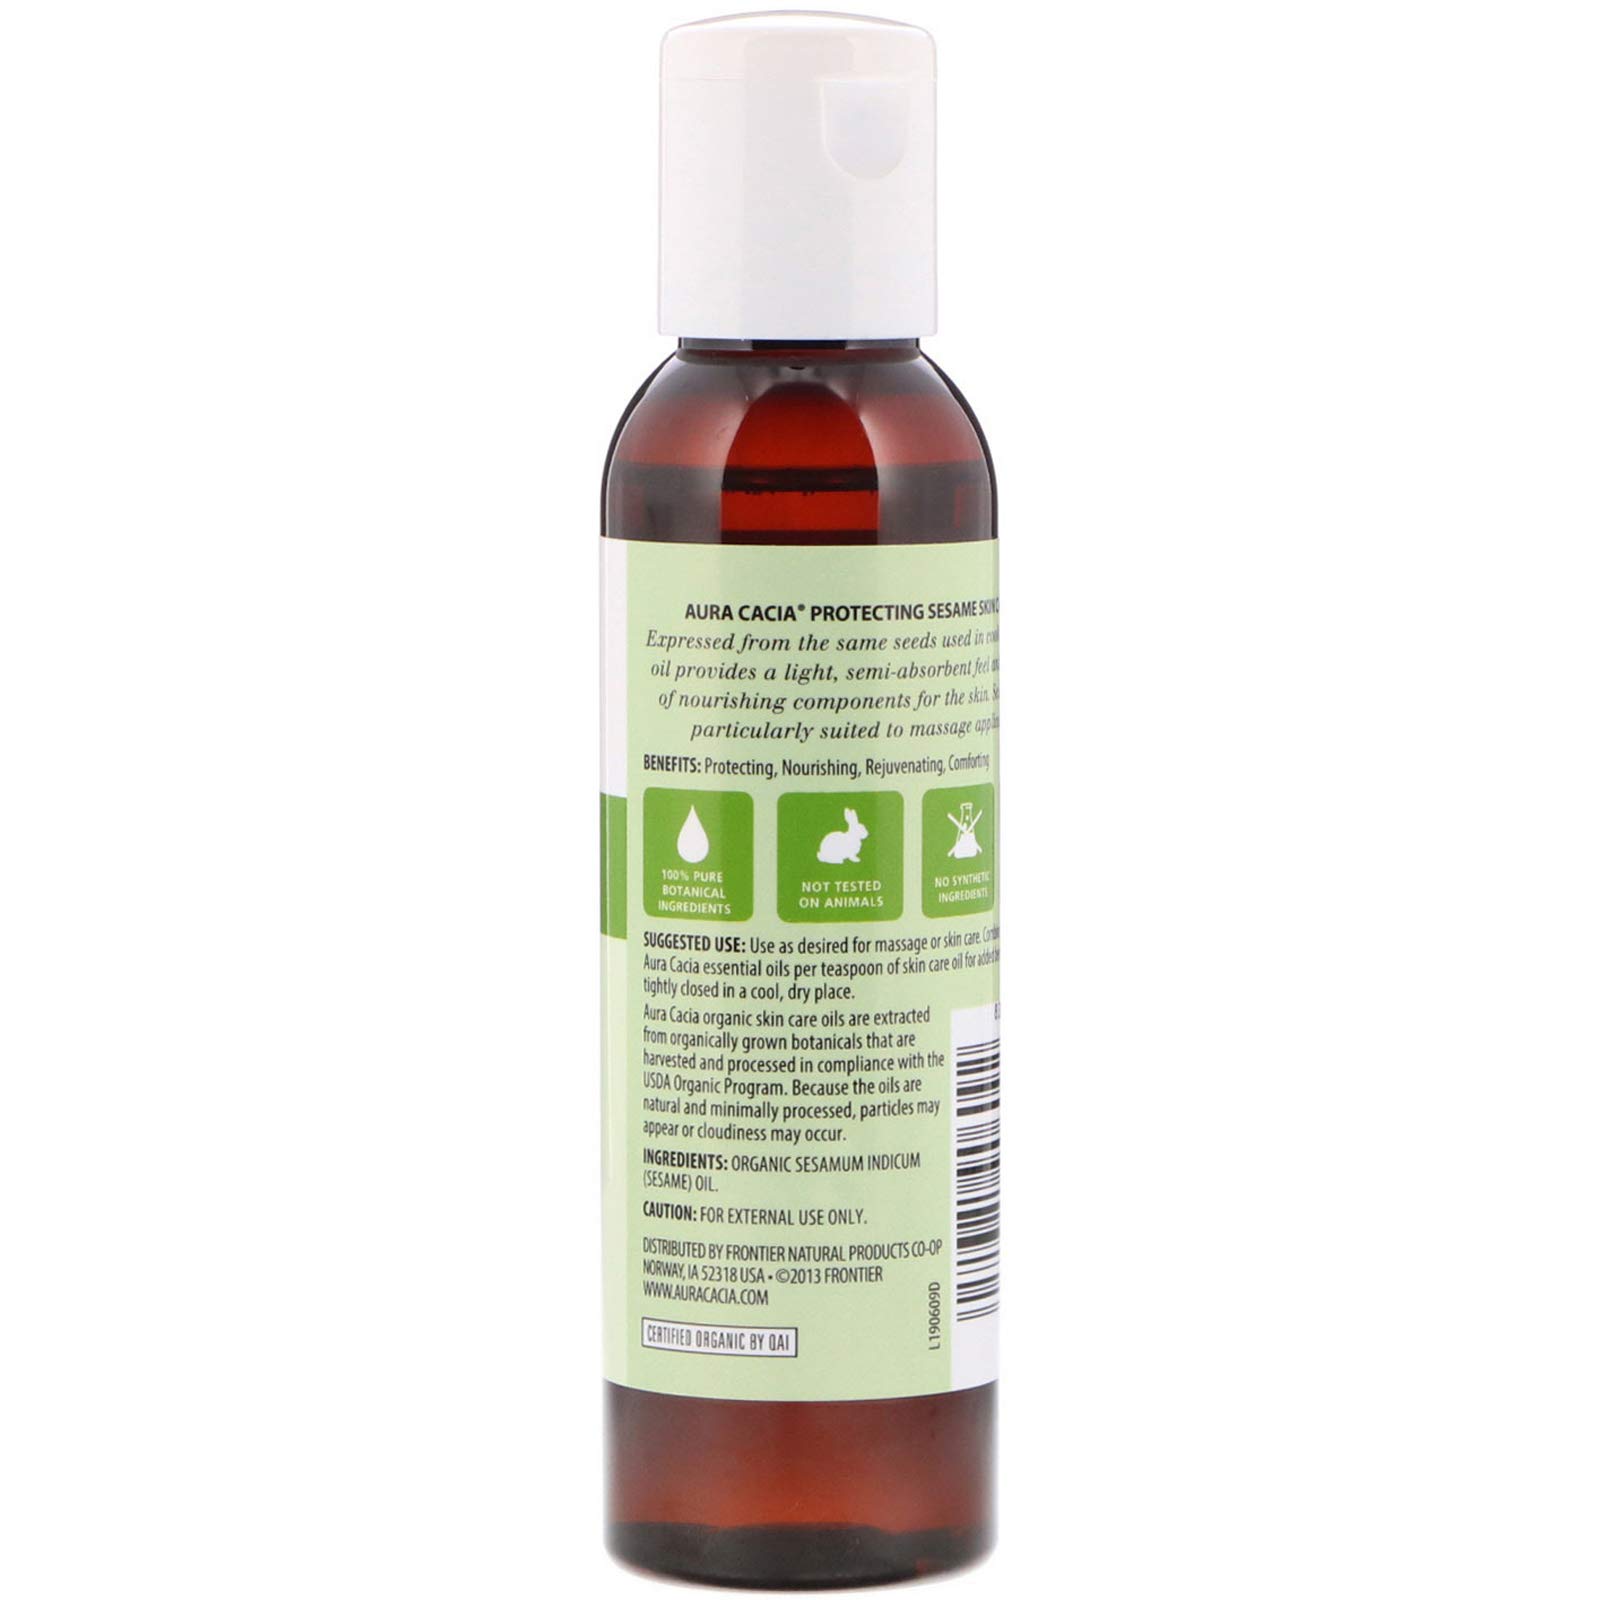 Aura Cacia Organic Skin Care Oil, Protecting Sesame, 4 fl oz (118 ml)3